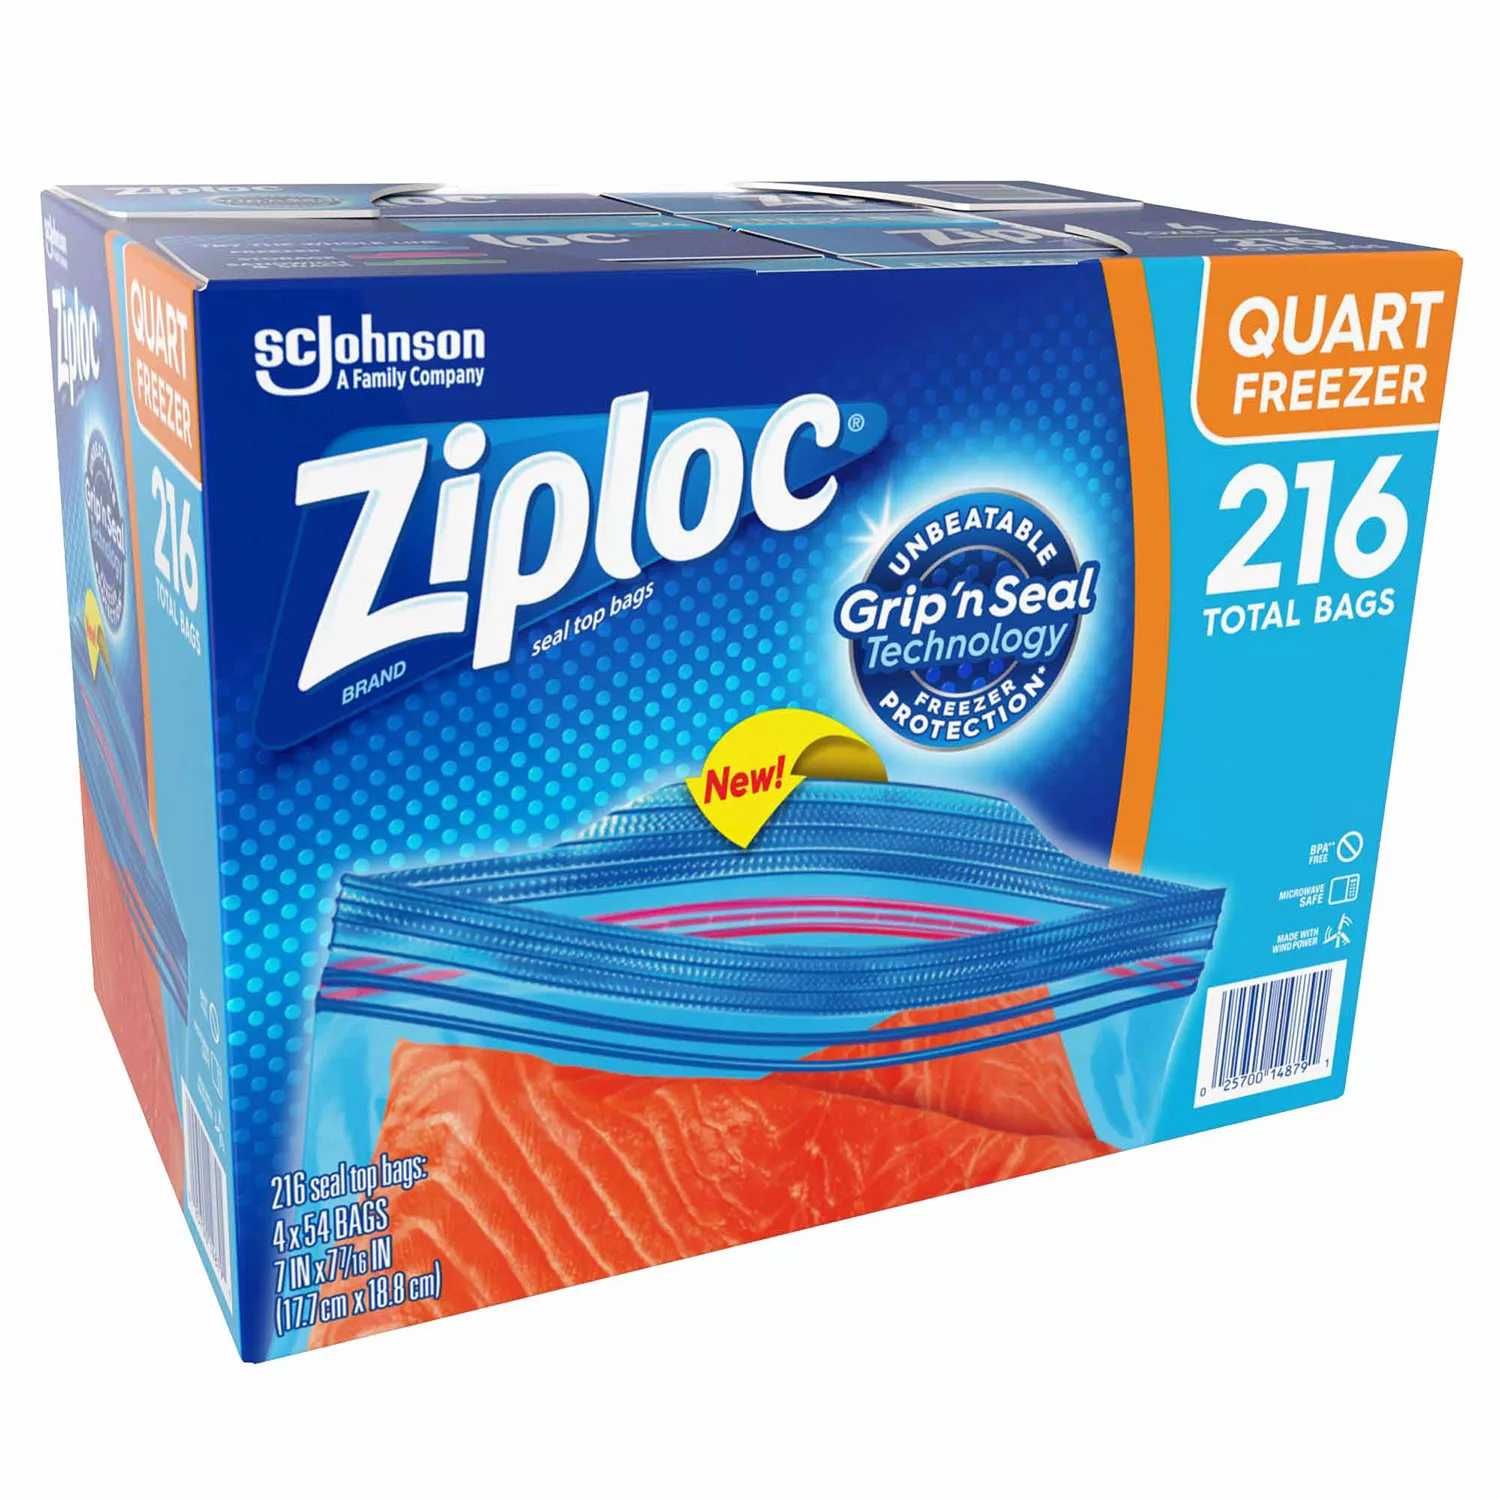 Пакеты Ziploc Easy Open Tabs для морозильной камеры, кварты (216 шт)